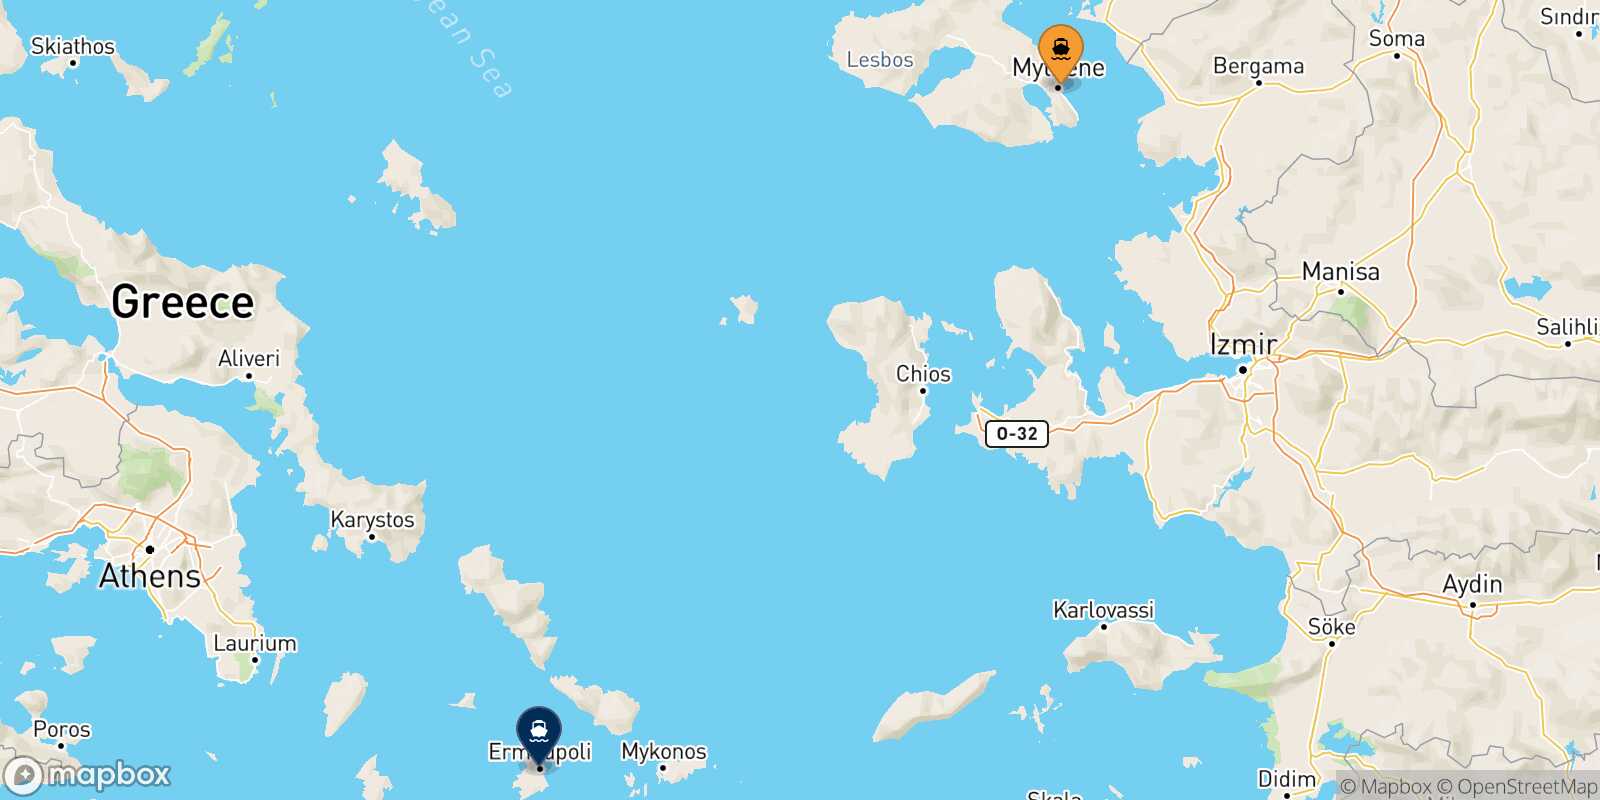 Mytilene (Lesvos) Syros route map